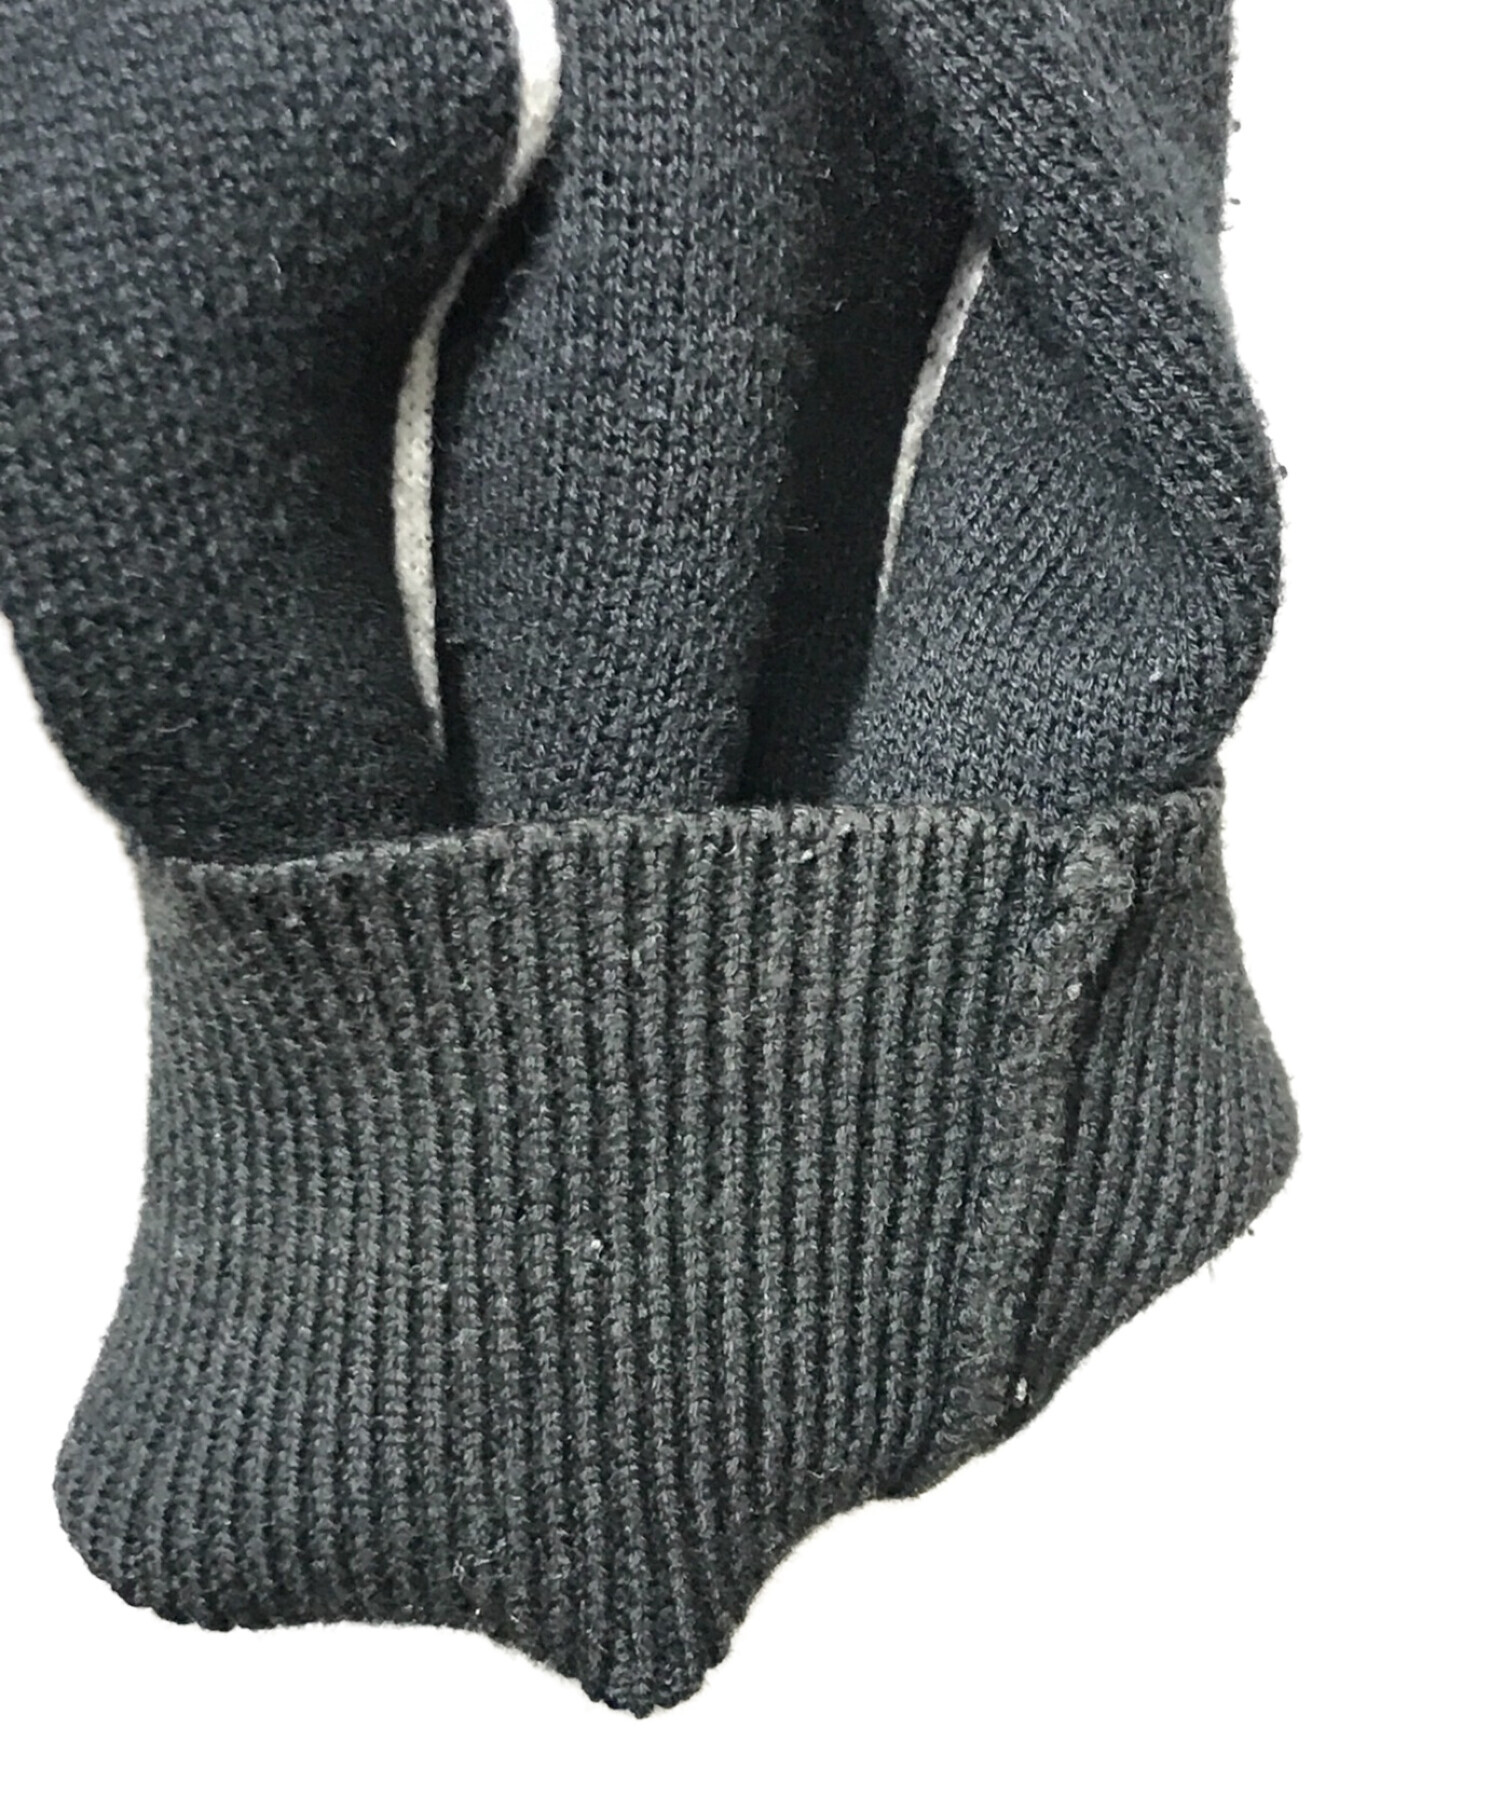 SUPREME (シュプリーム) Wide Pinstripe Sweater ブラック サイズ:M